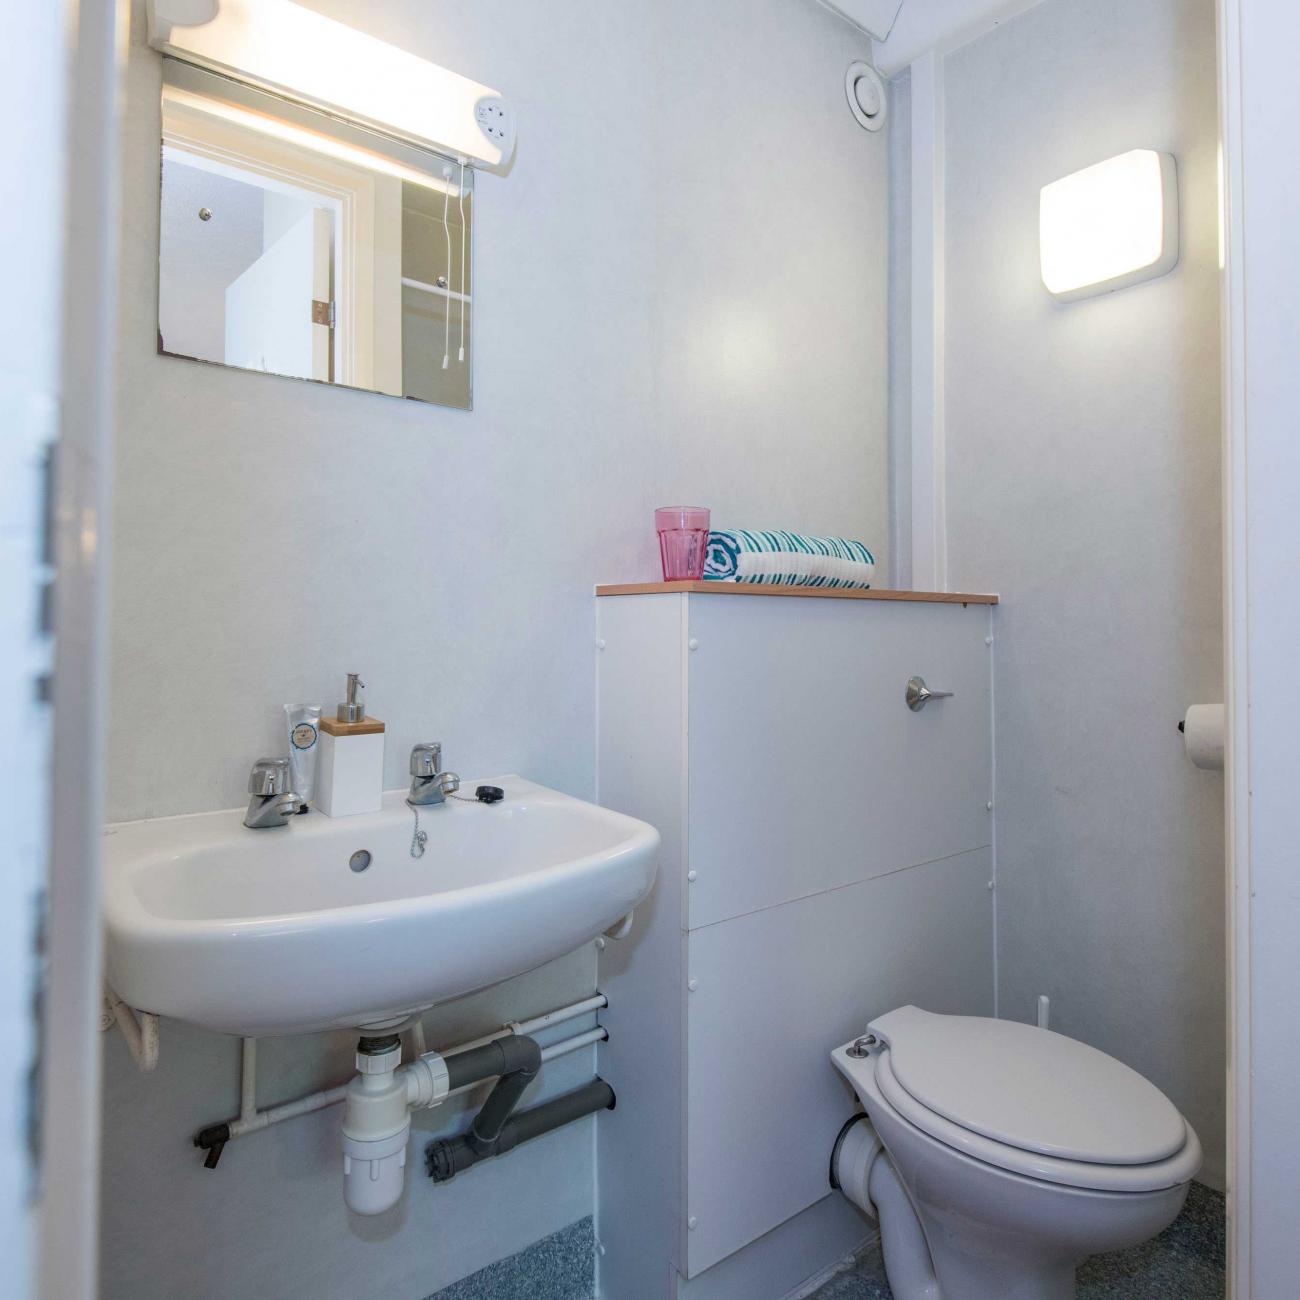 En-suite bathroom showing sink, toilet and shower.